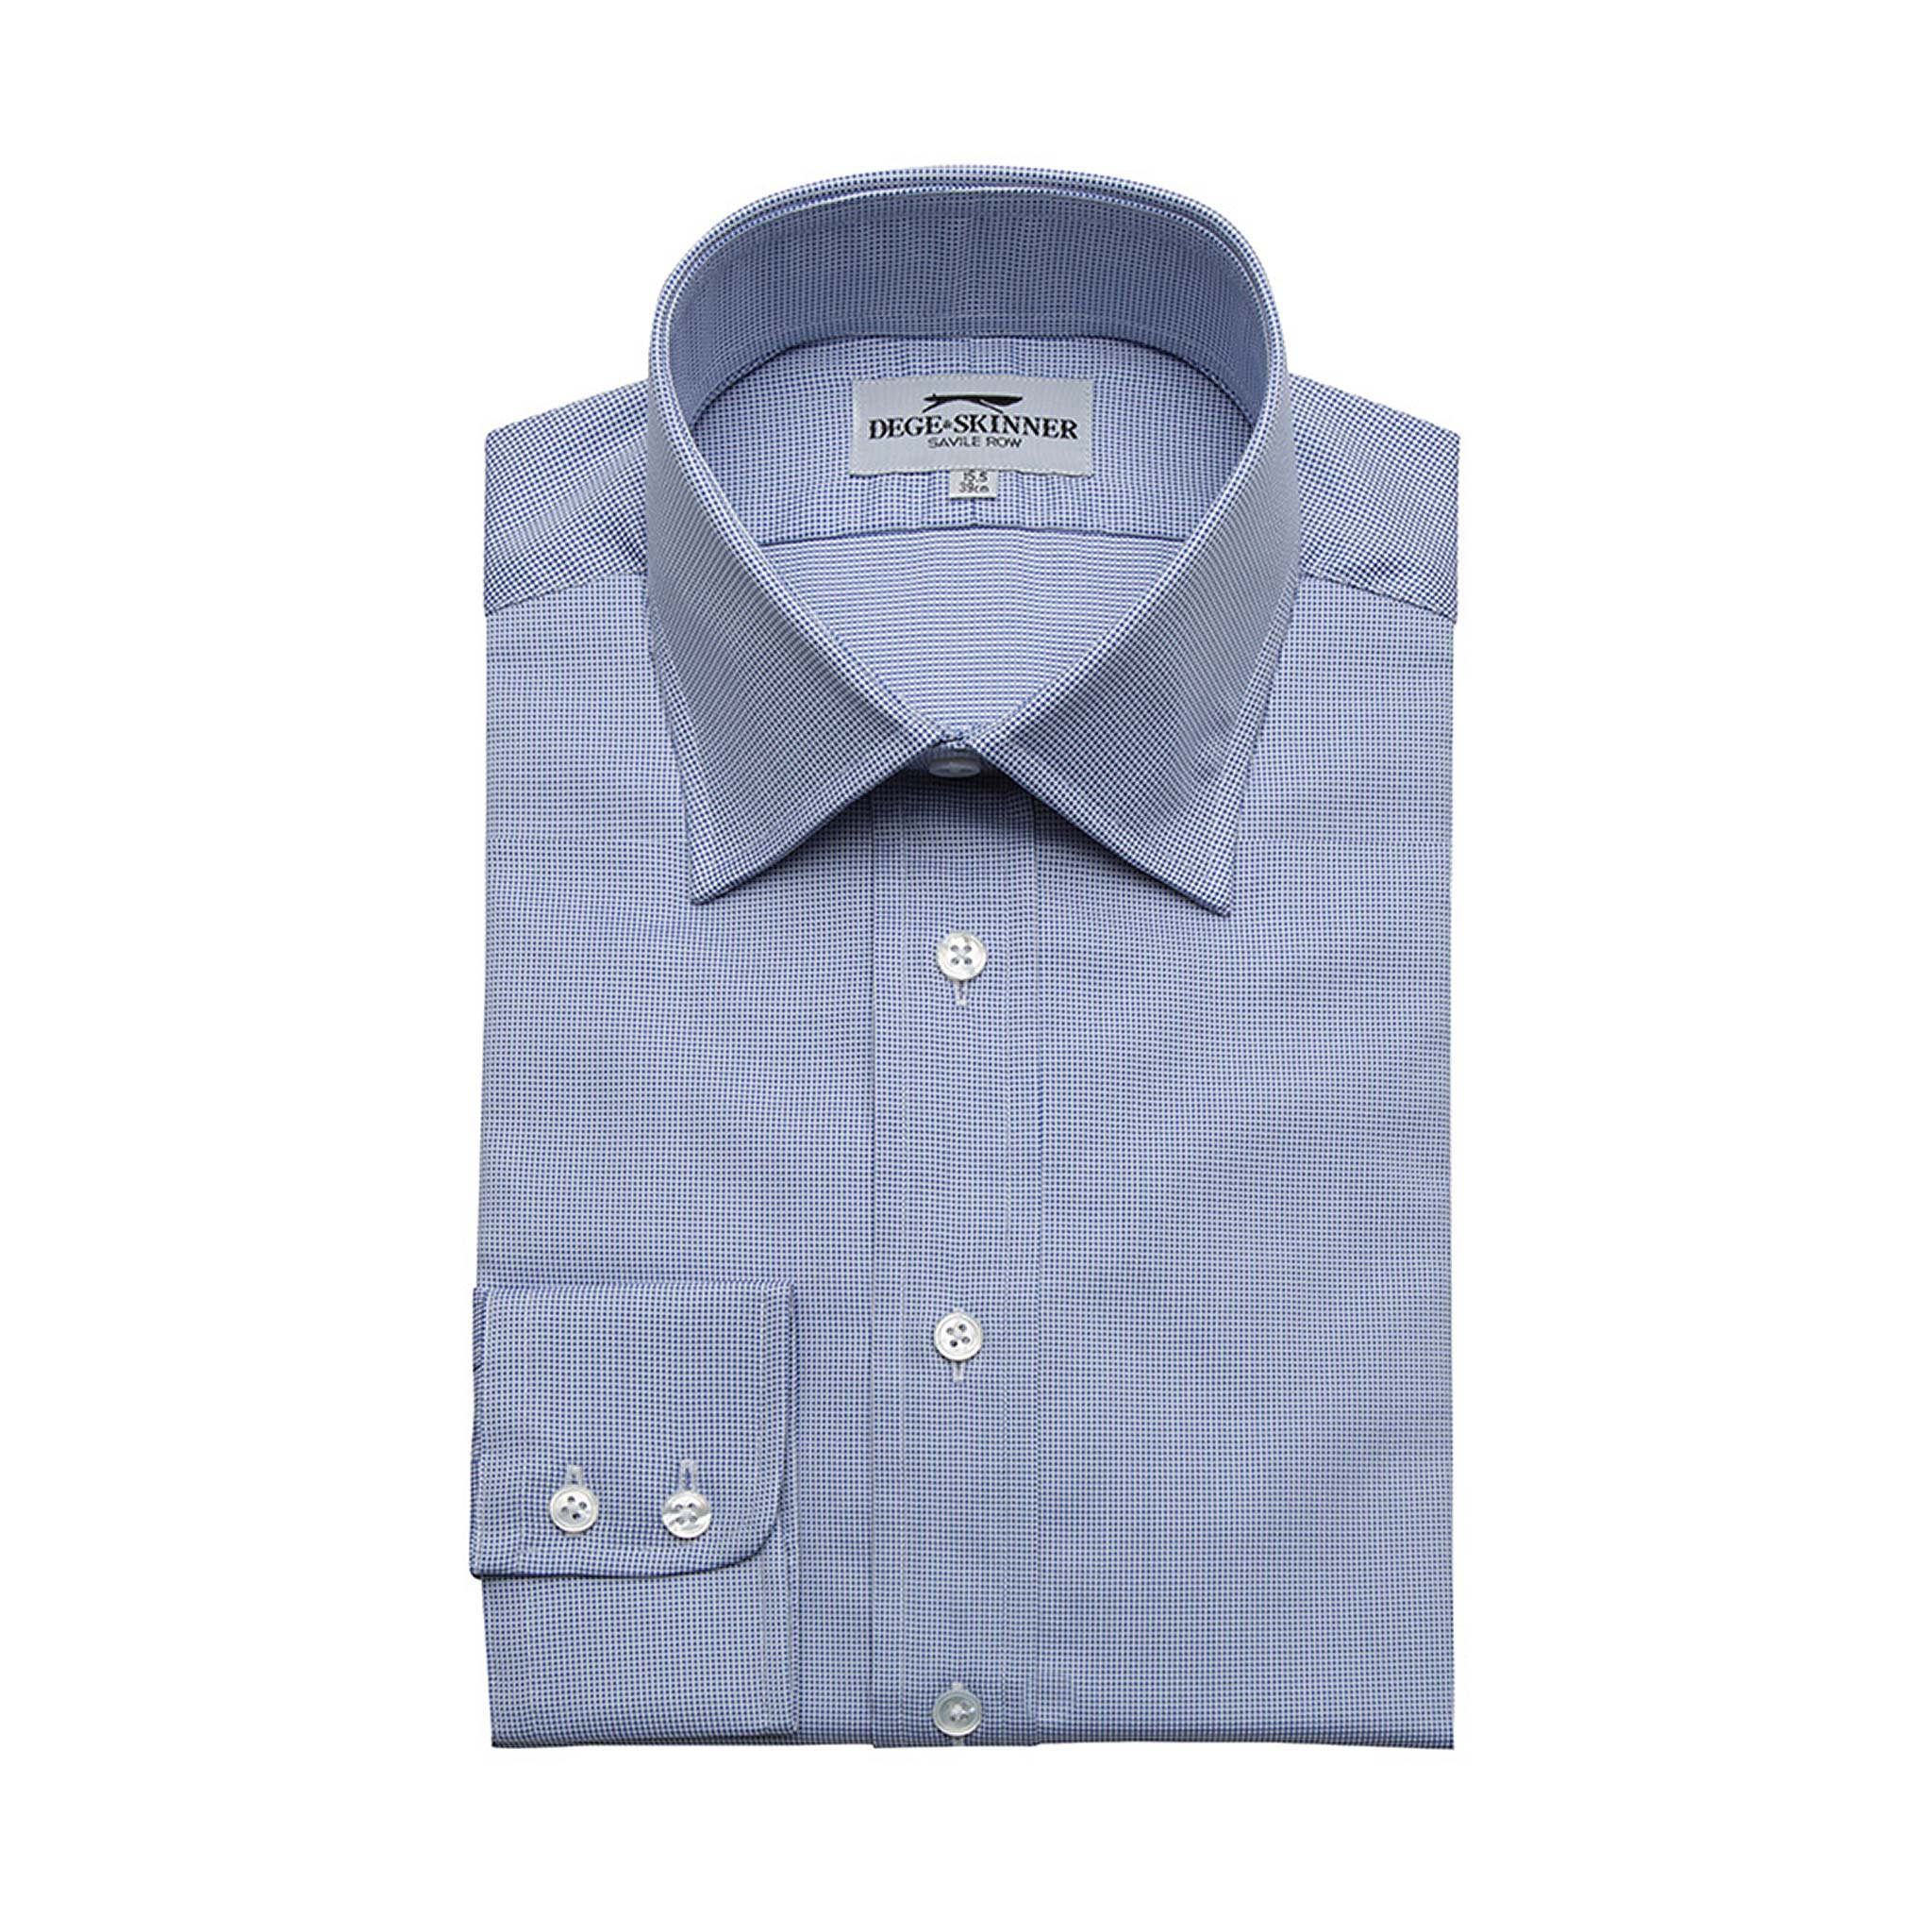 Blue & White Royal Oxford Cotton Shirt, Button Cuff - Dege & Skinner